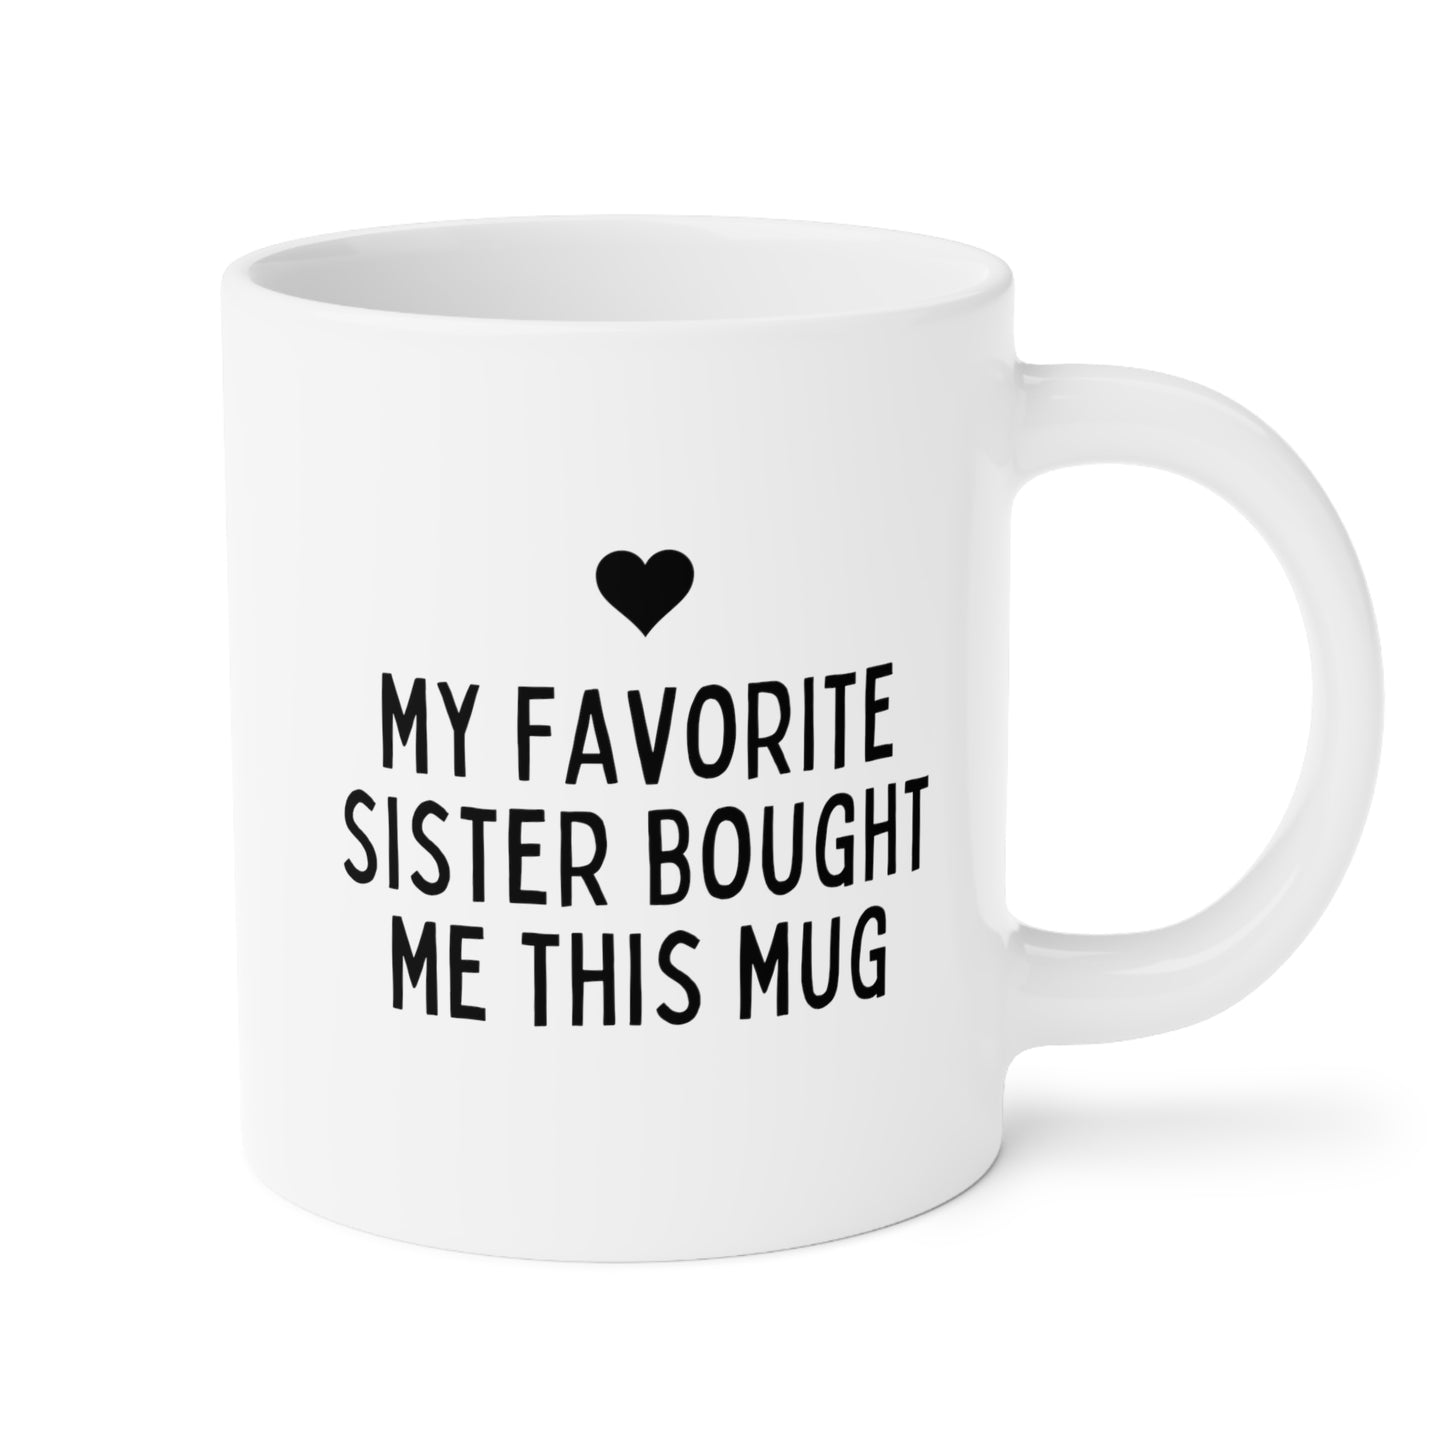 My Favorite Sister Bought Me This Mug 20oz white funny large coffee mug gift for brother sister sibling family birthday waveywares wavey wares wavywares wavy wares